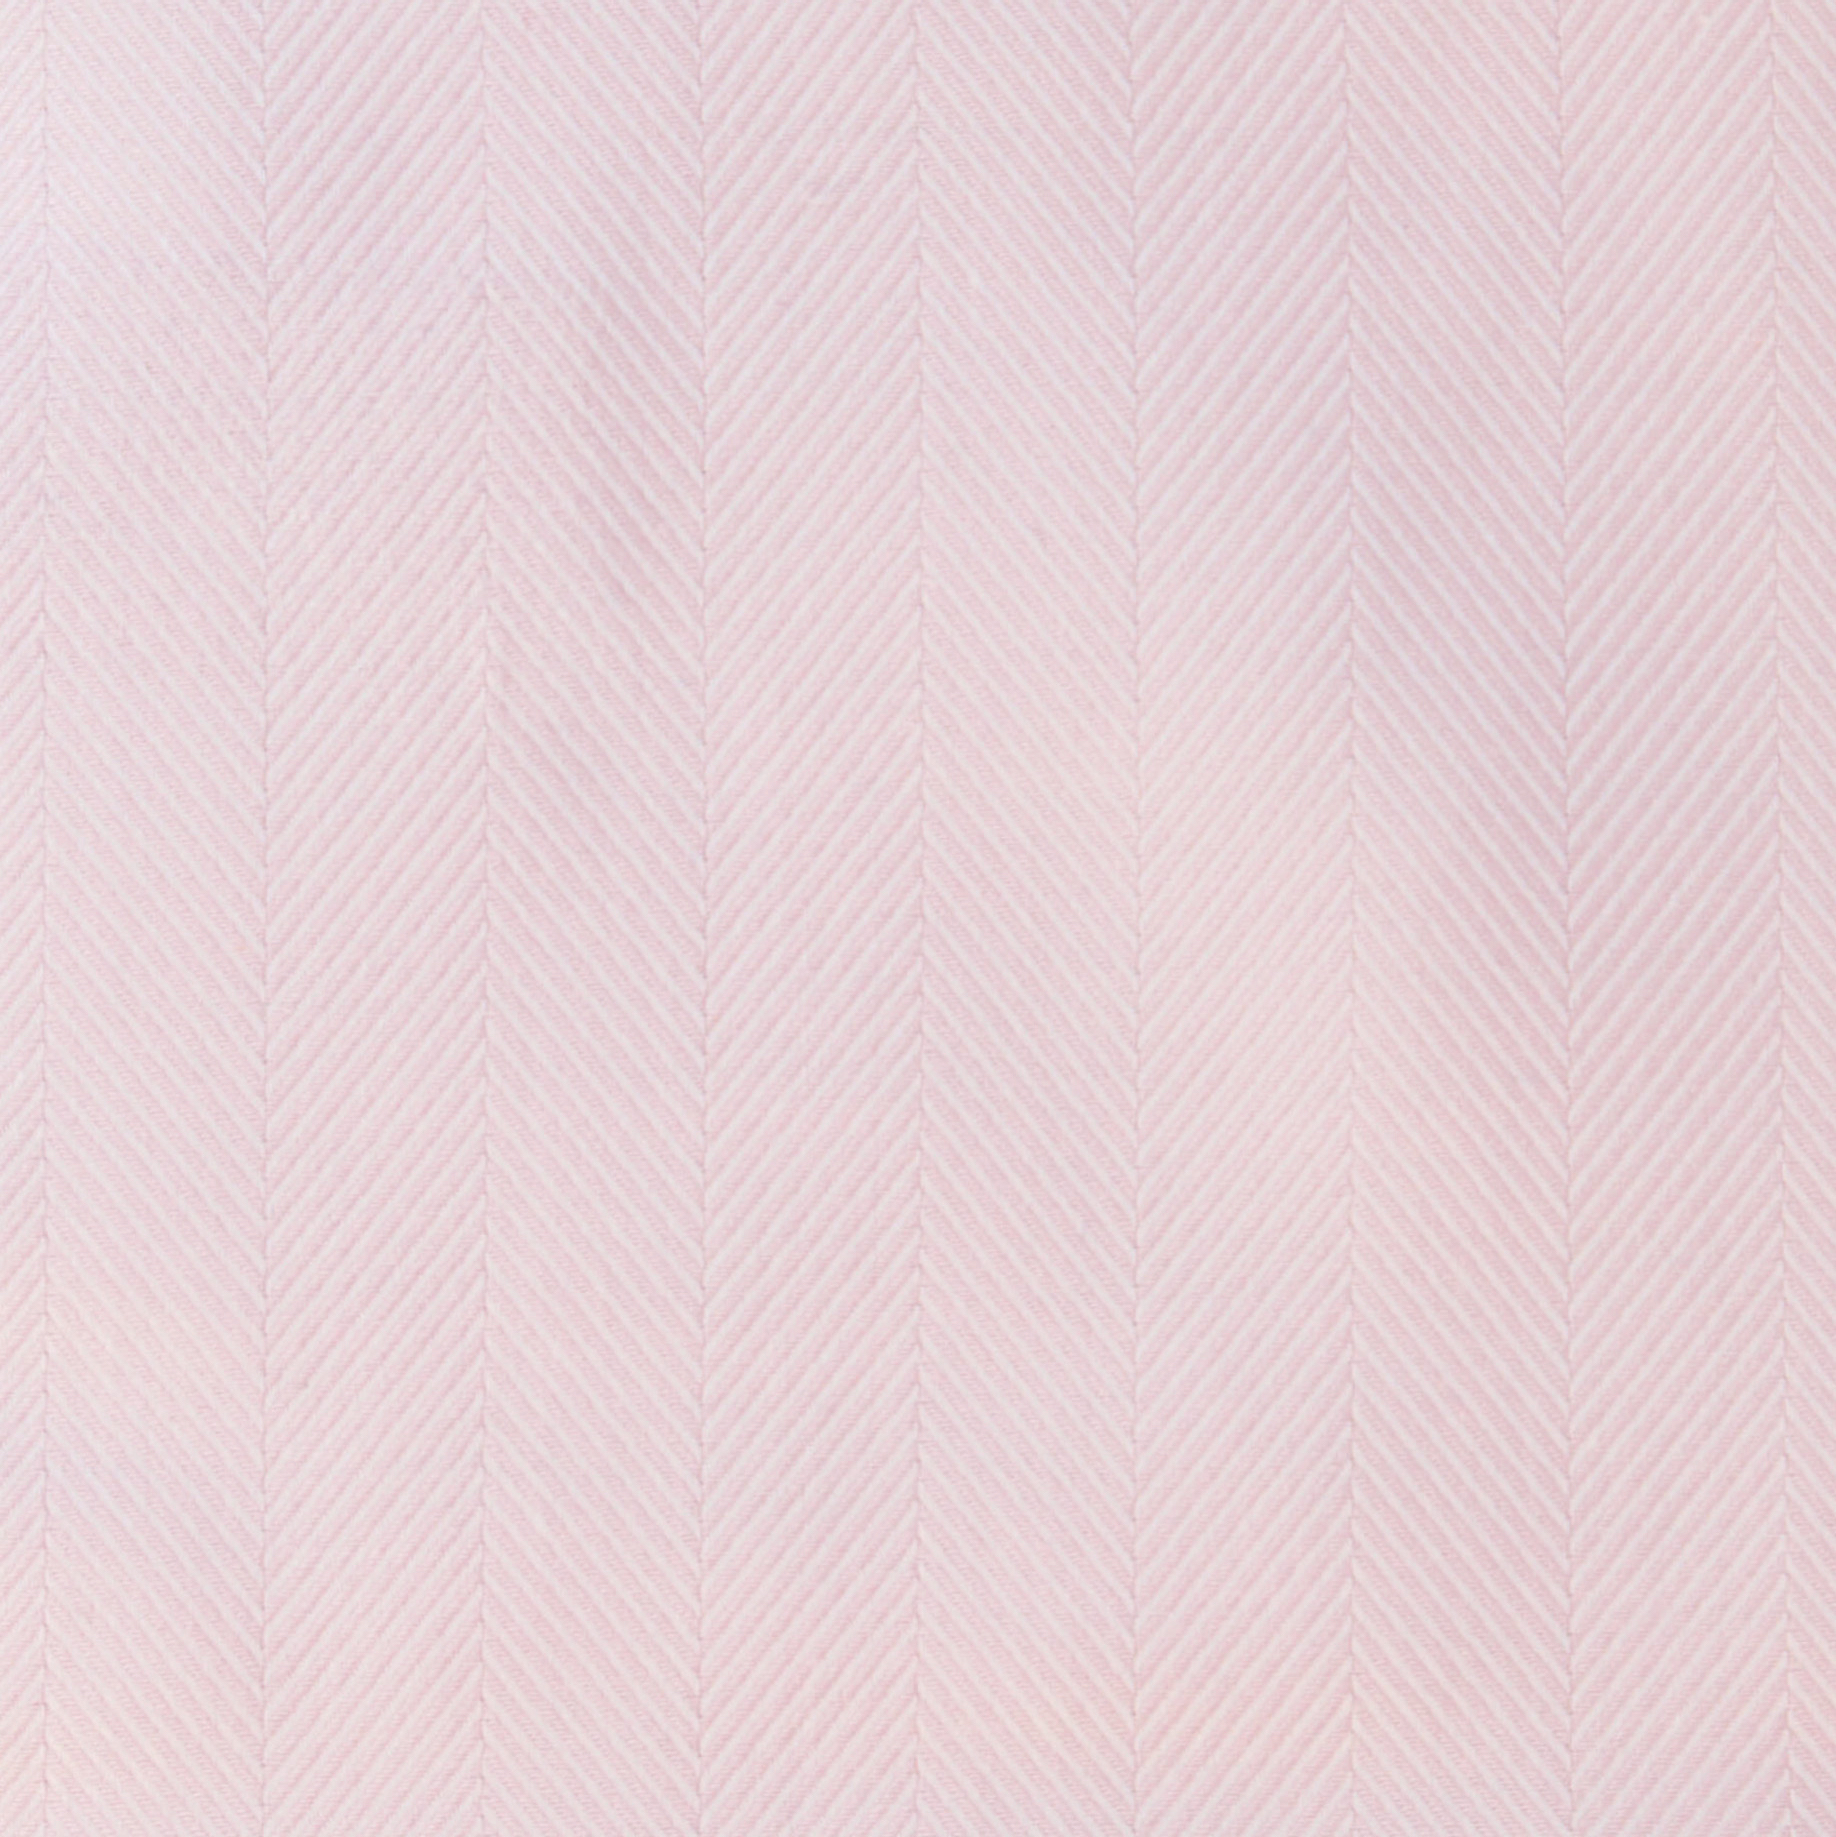 Buy tailor made shirts online - Presidents Range (CLEARANCE) - Pink Herringbone